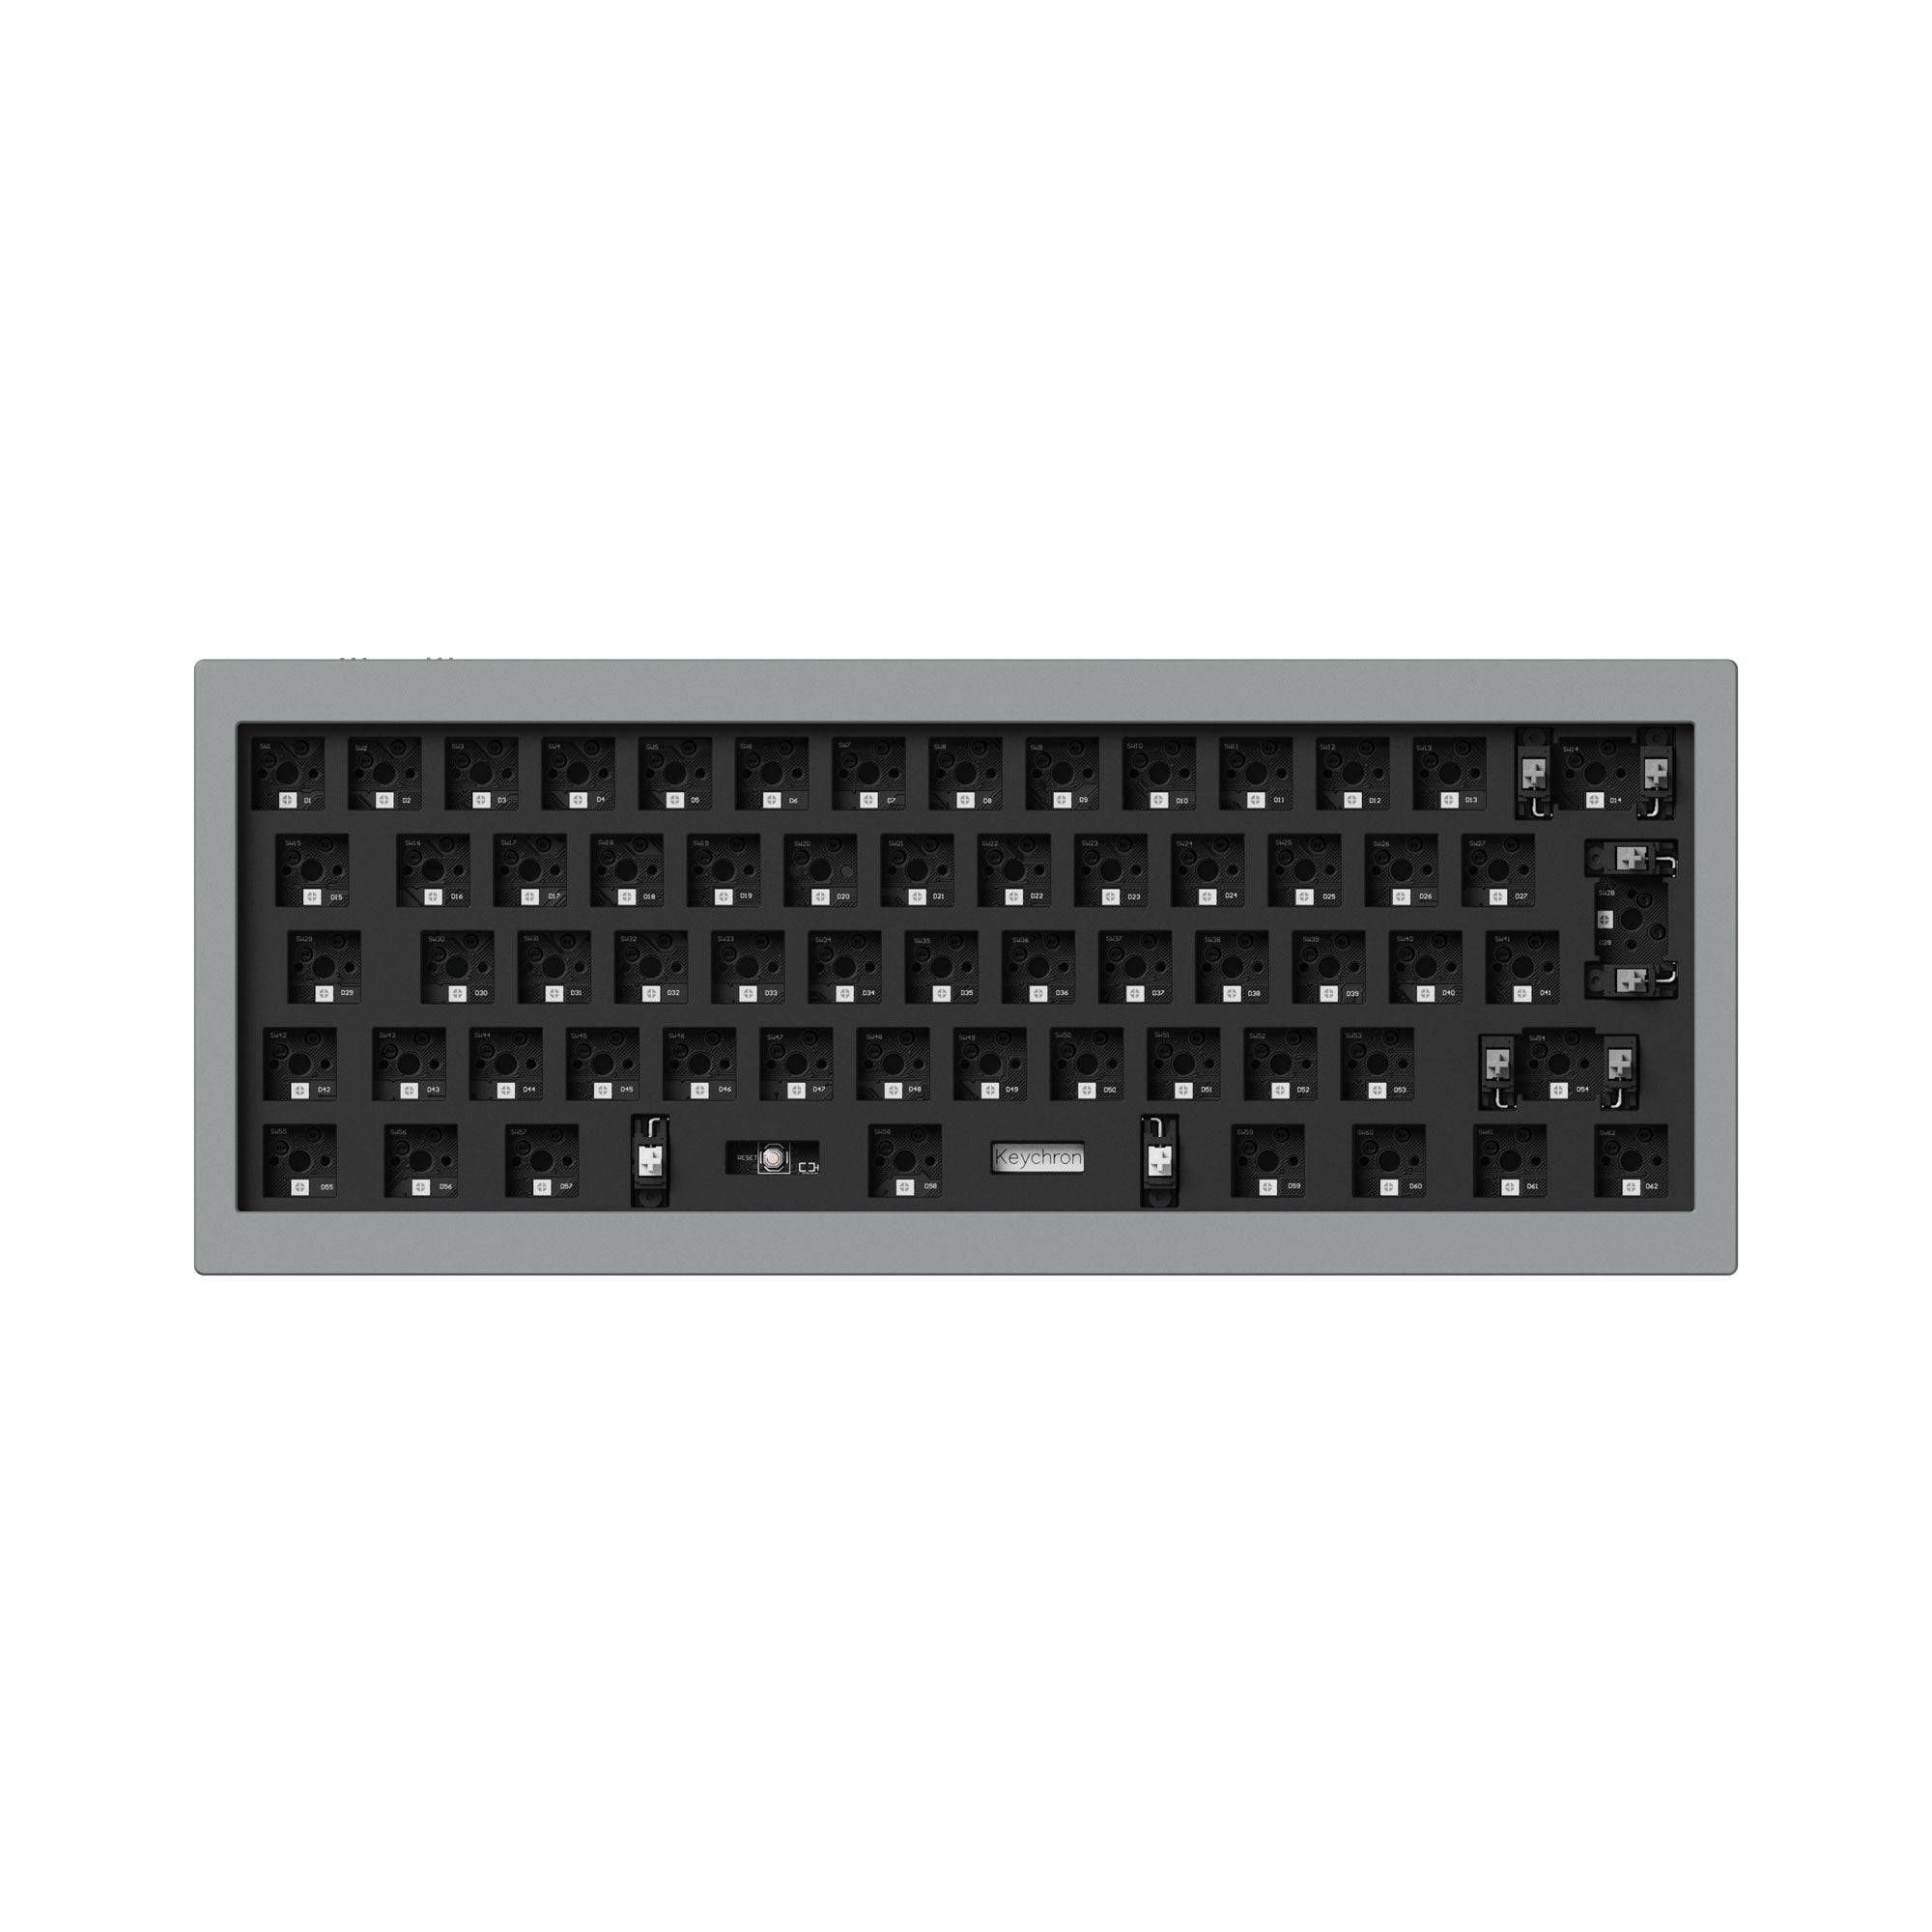 Keychron Q4 Pro QMK/VIA wireless custom mechanical keyboard 60 percent layout full aluminum grey frame for Mac WIndows Linux with RGB backlight and hot-swappable barebone ISO